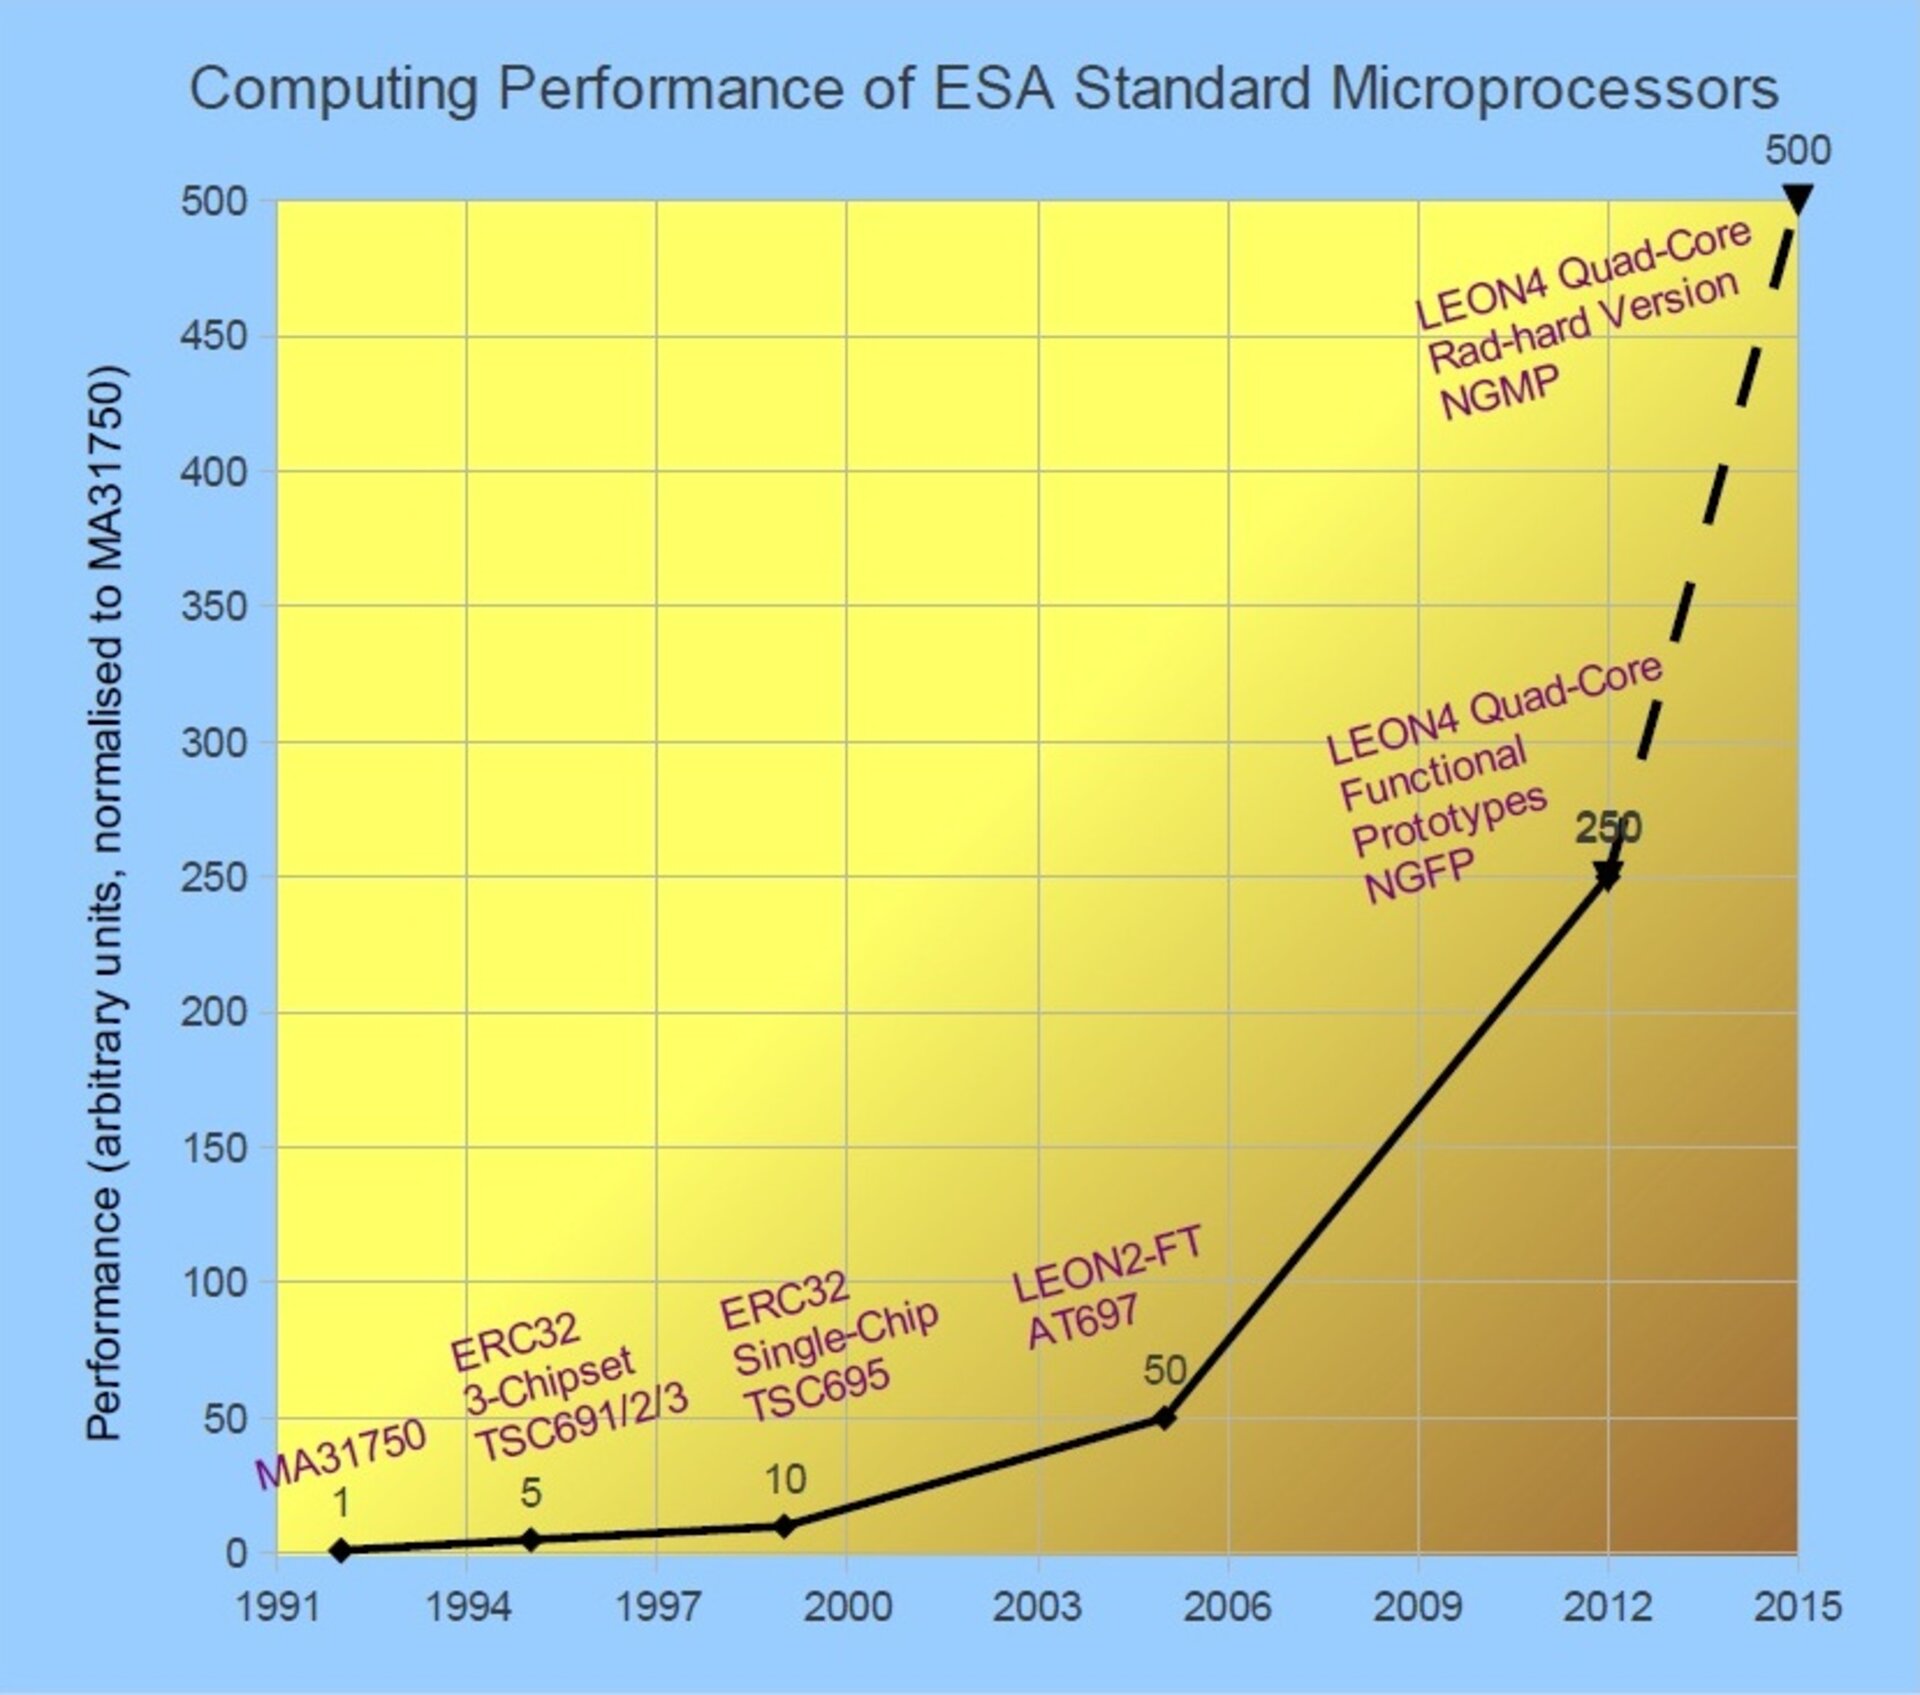 Computing performance of ESA's standard microprocessors